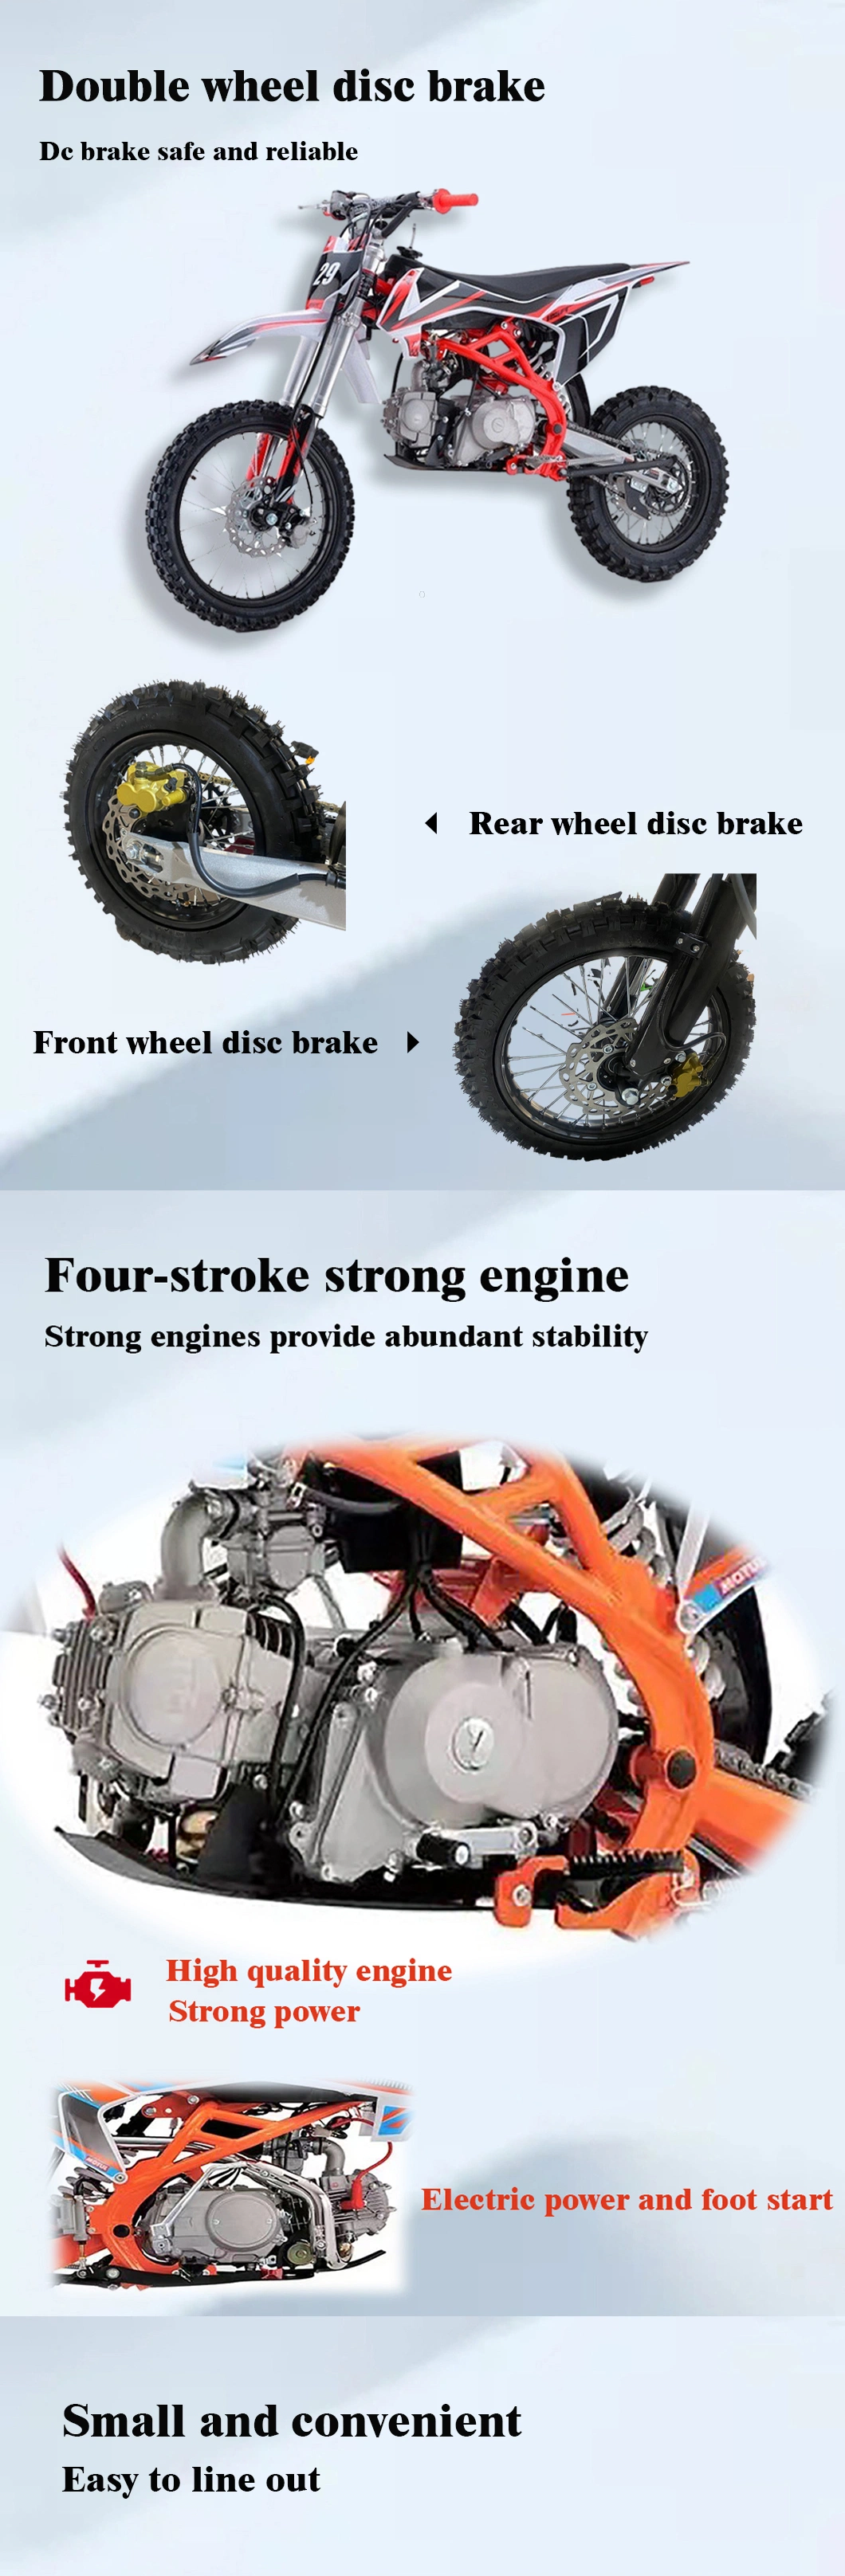 125cc Four-Stroke Single Cylinder Large Displacement Gasoline Version of The Dirt Bike